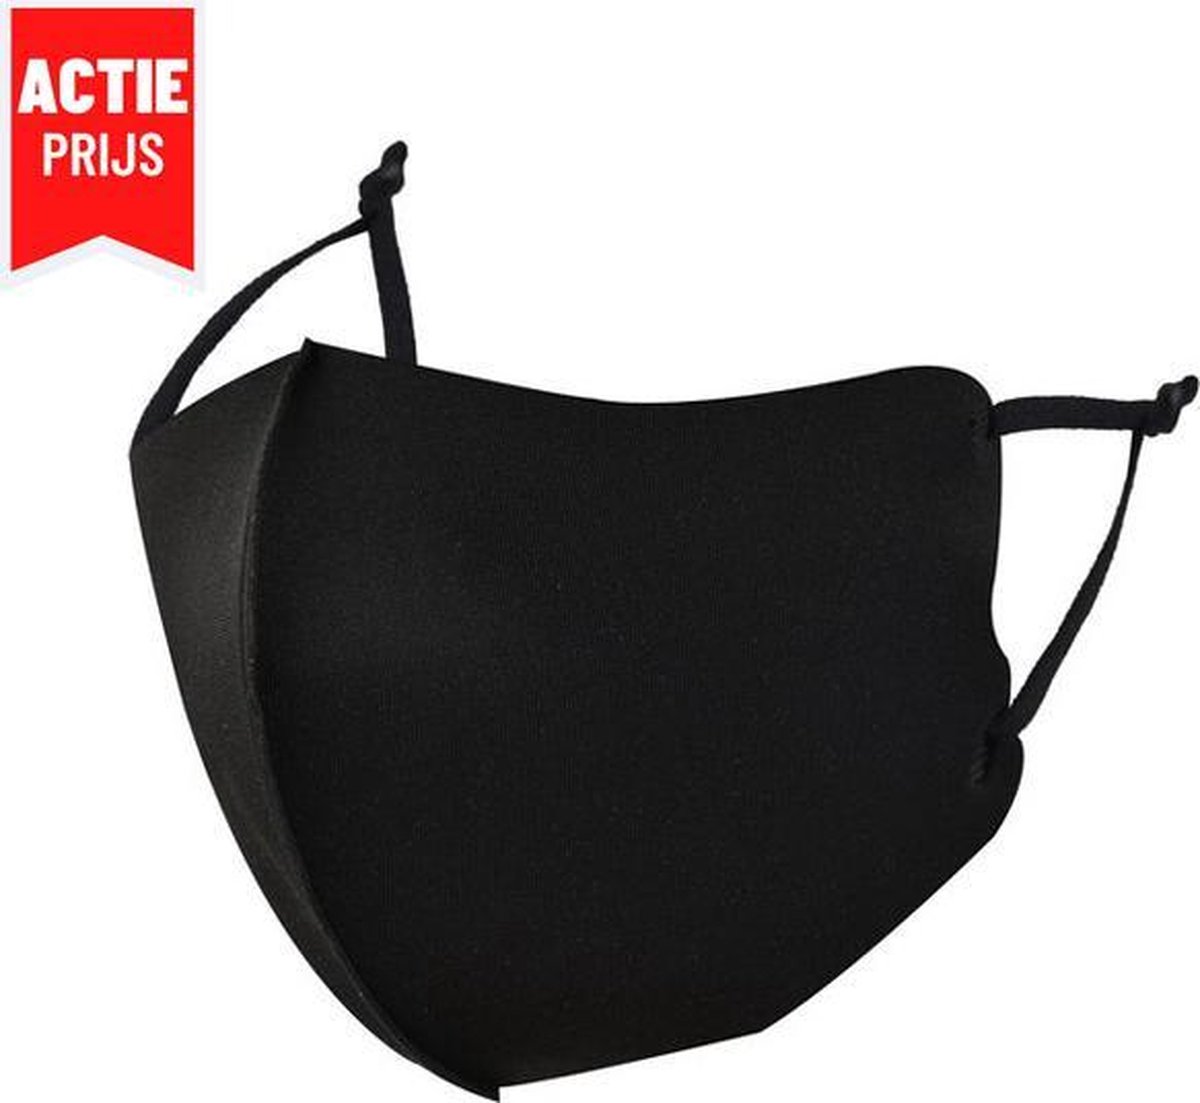 Mondkapje zwart - 2 stuks - Wasbaar - Hoogwaardige kwaliteit - Herbruikbaar - Verstelbaar mondmasker - Facemask - Fit Direct